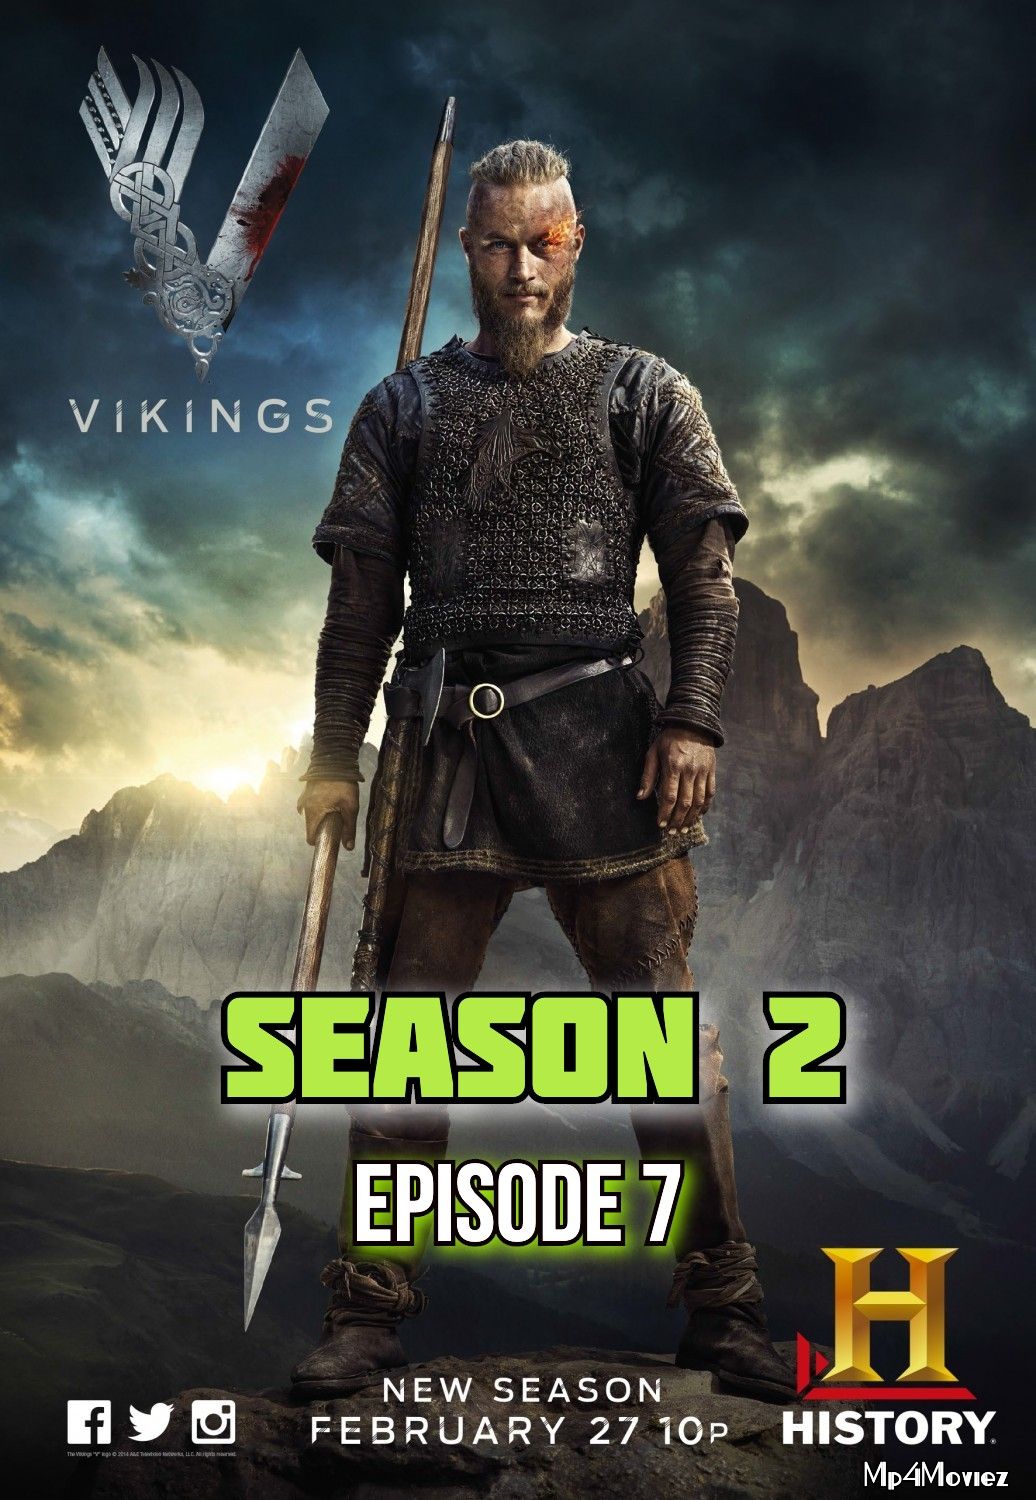 Vikings S02E07 (Blood Eagle) Hindi Dubbed download full movie